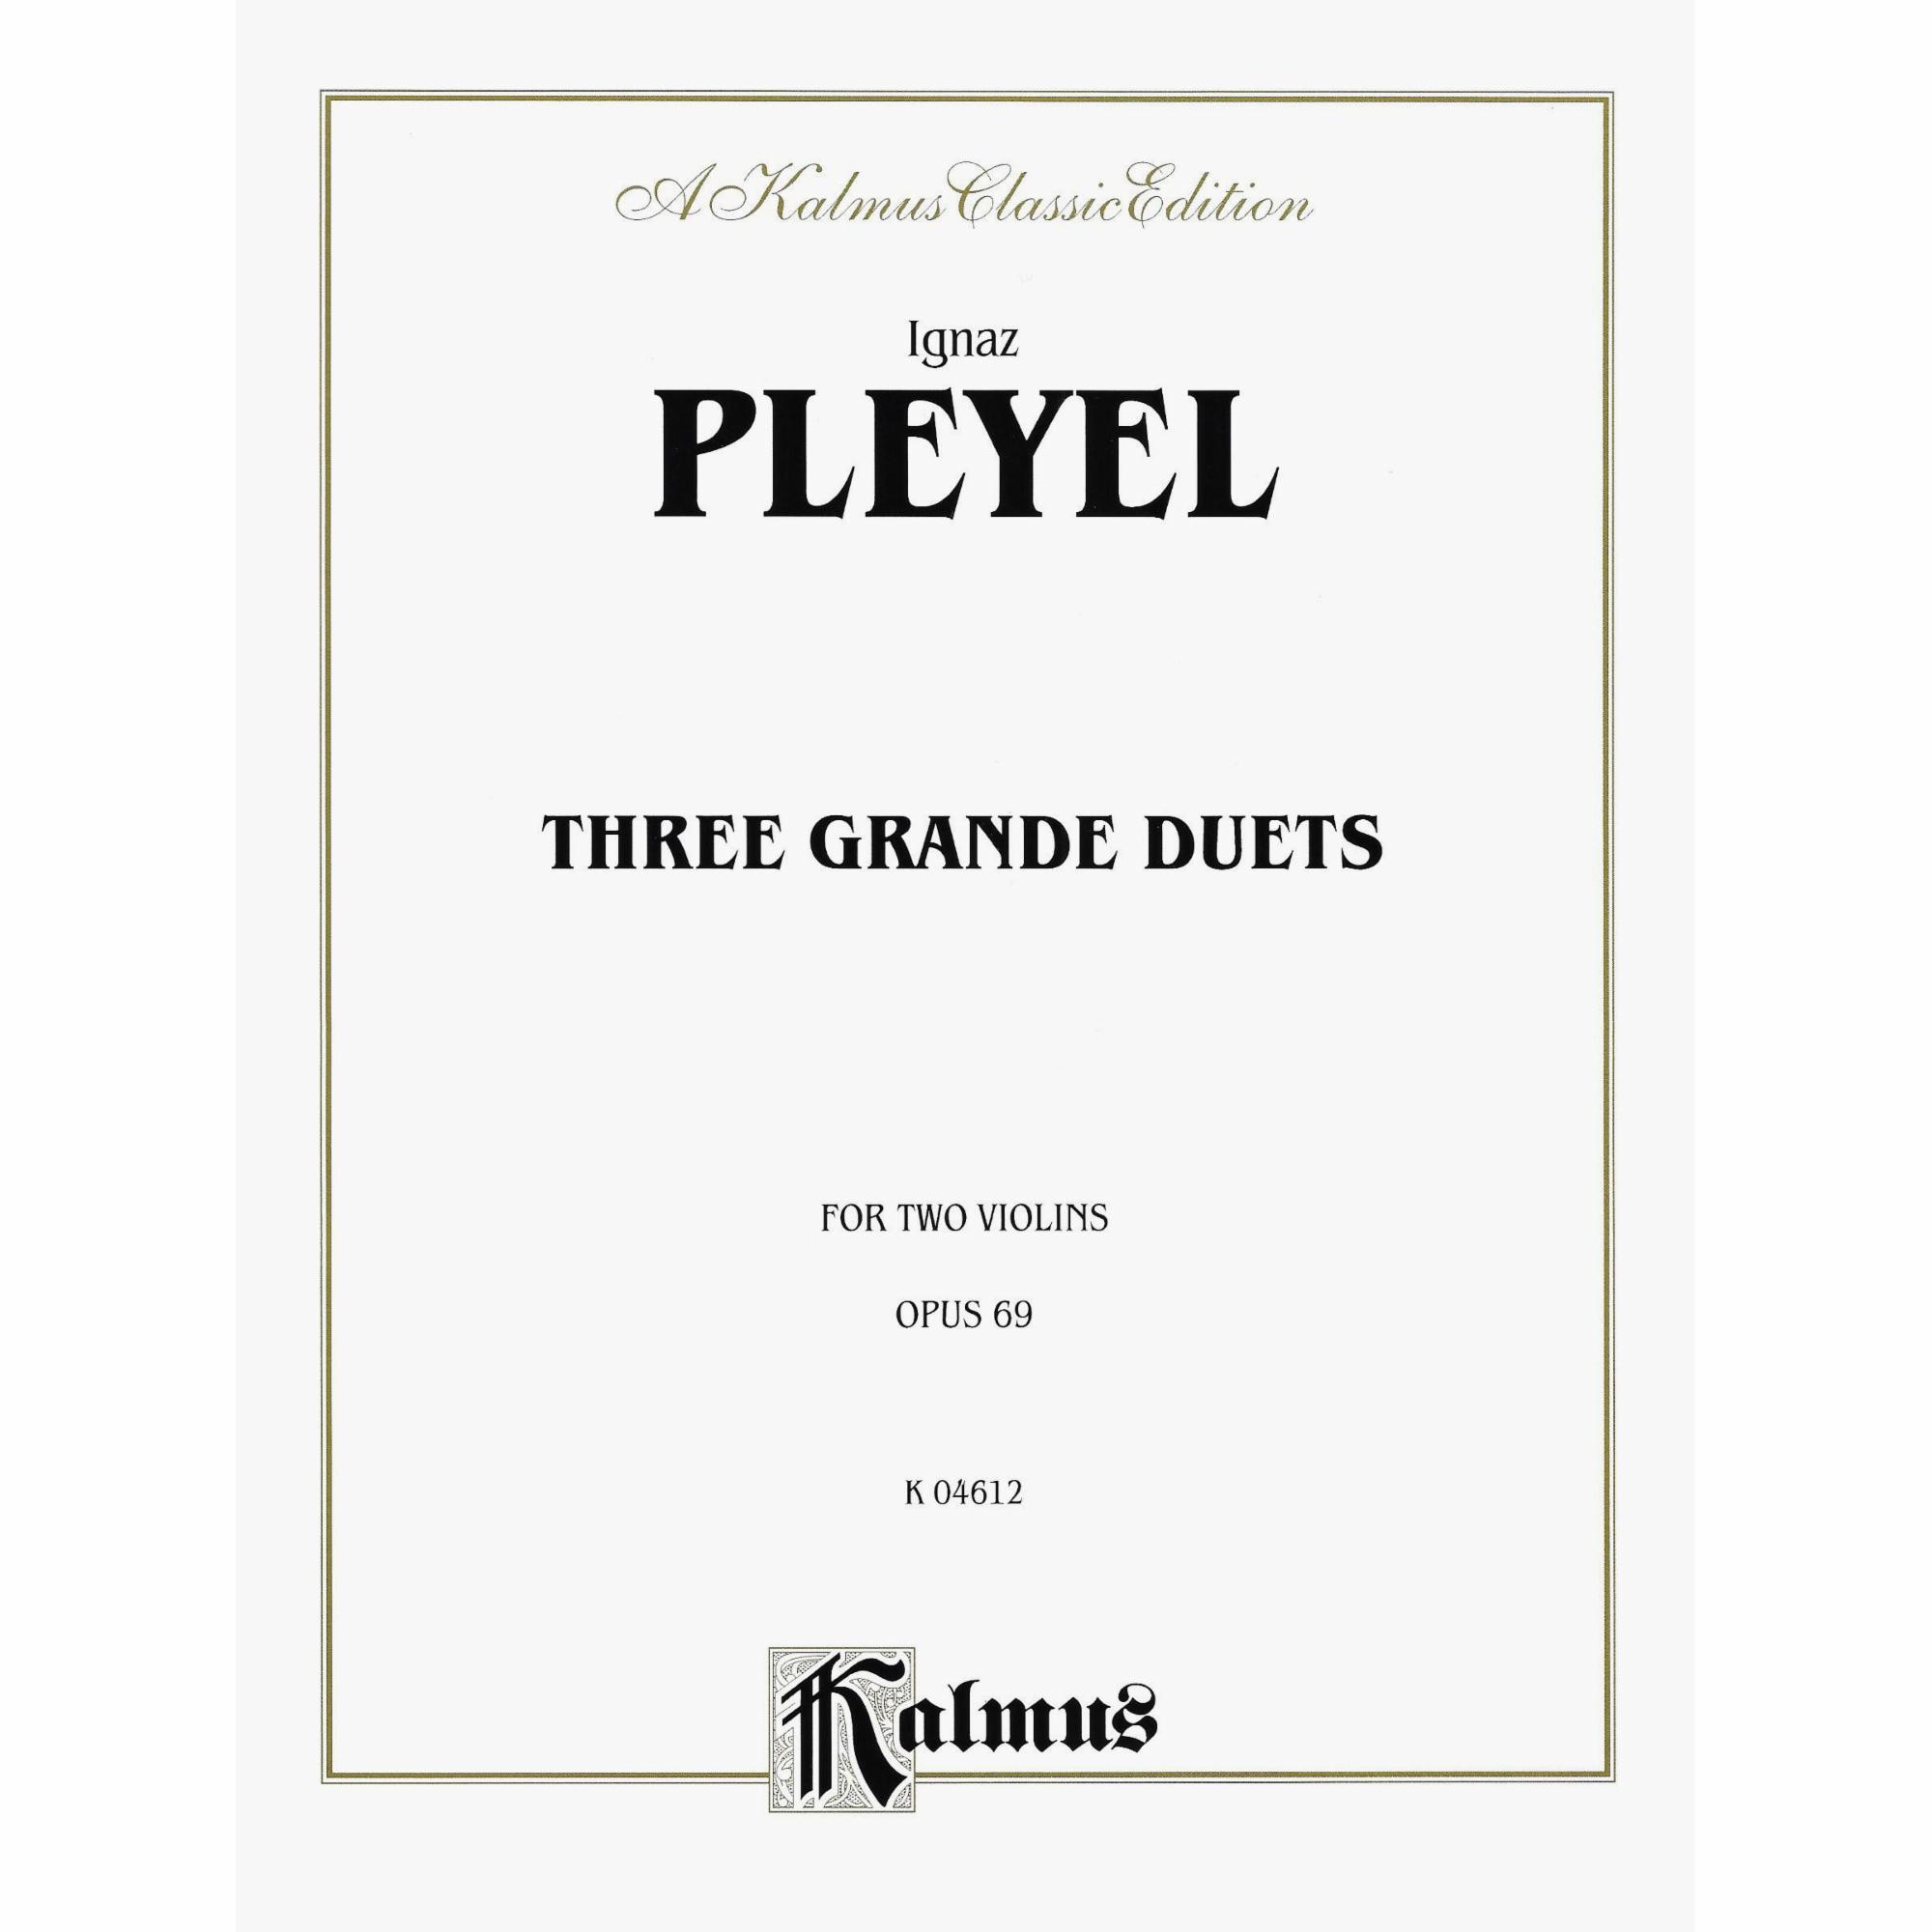 Pleyel -- Three Grande Duets, Op. 69 for Two Violins